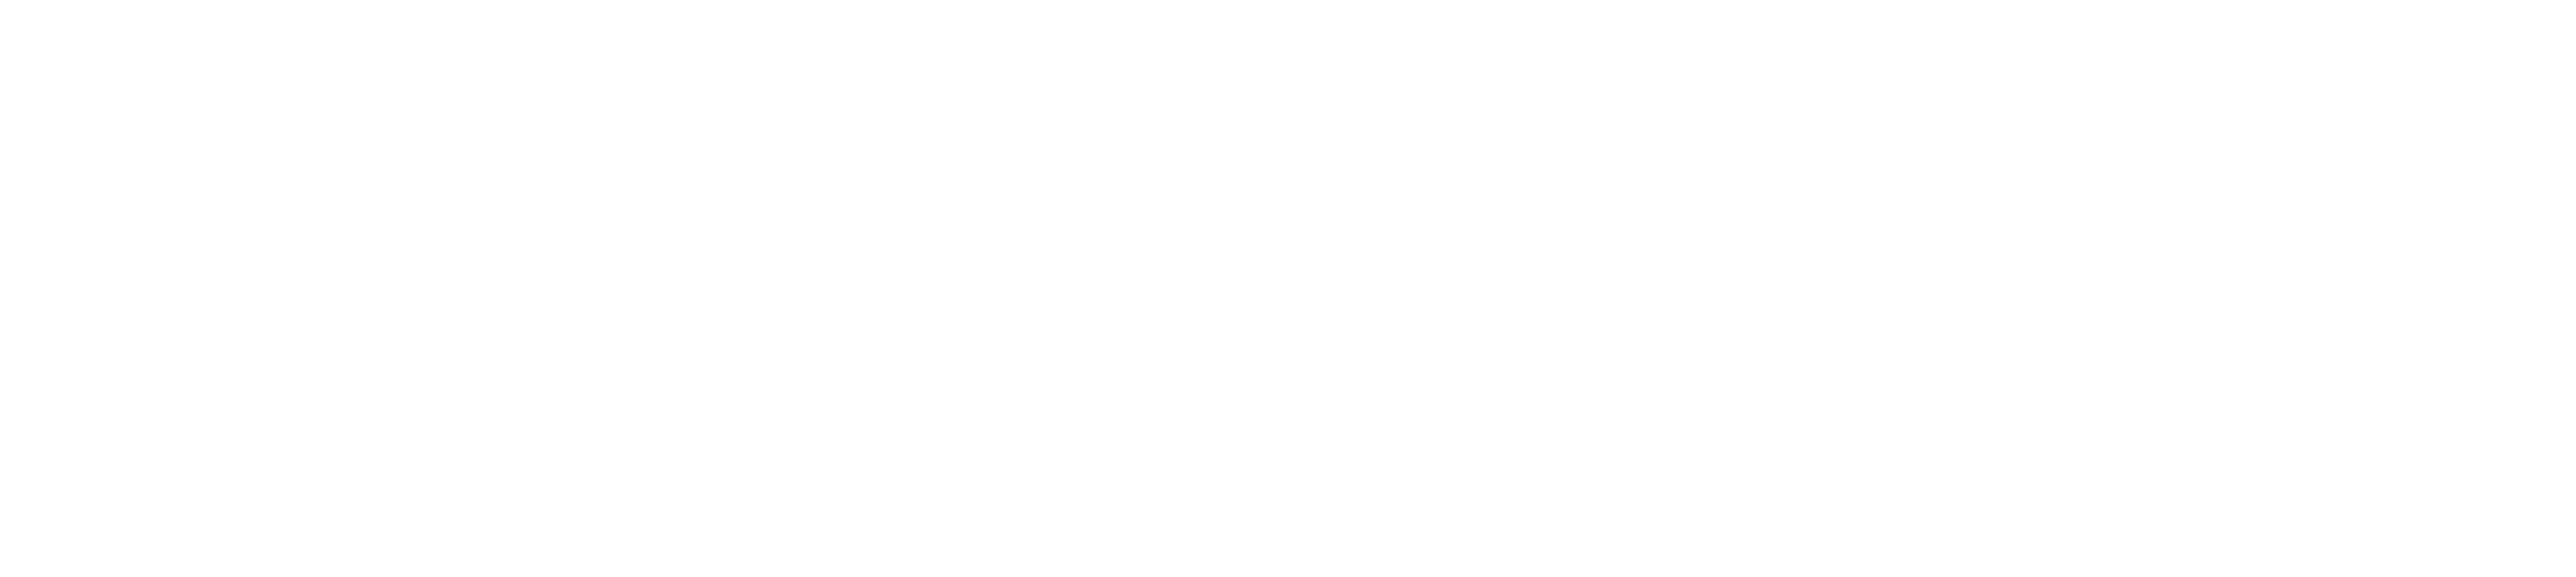 The OnePopz logo.